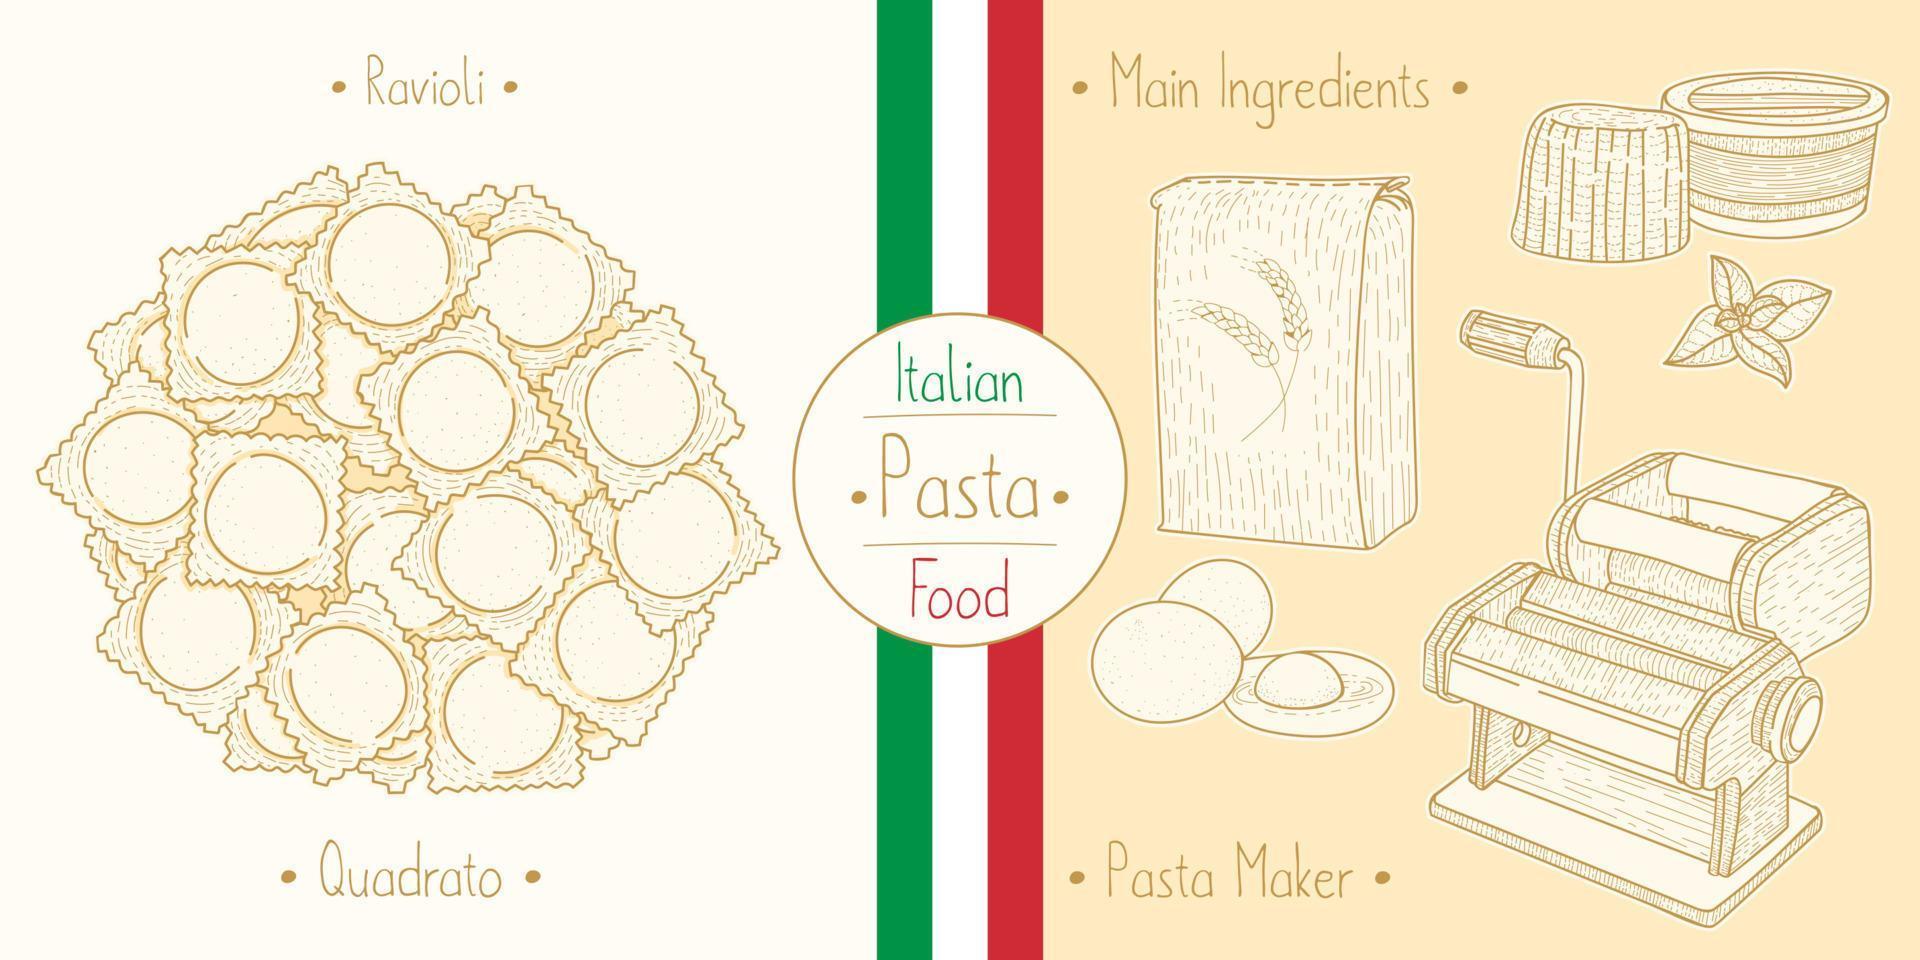 massa de comida italiana com recheio de ravioli quadrado vetor